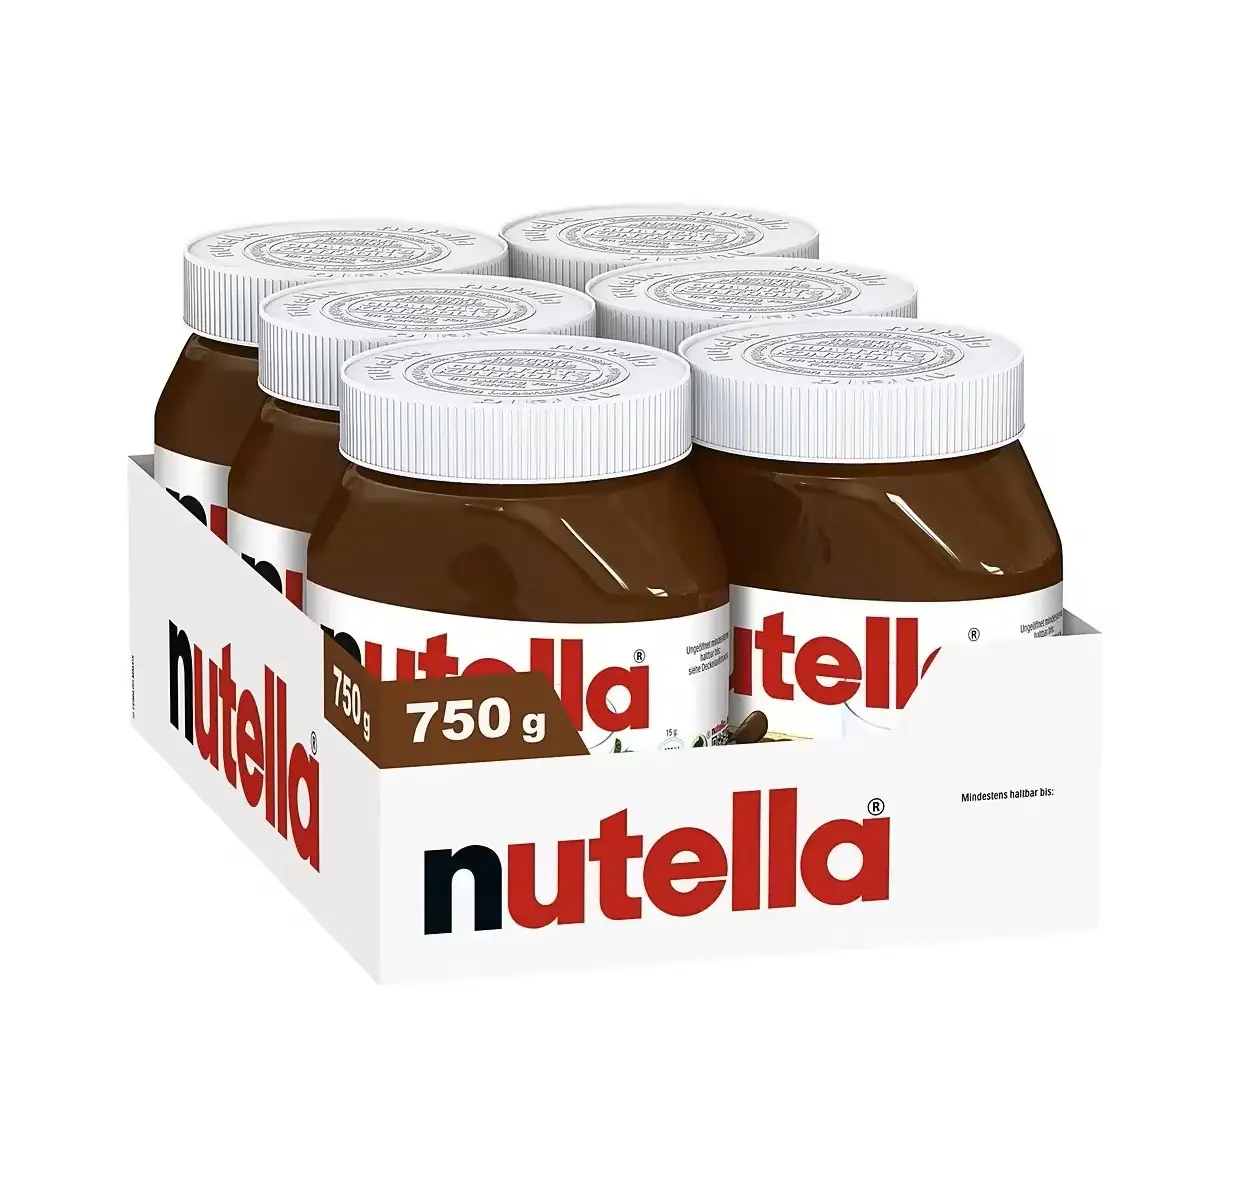 Nutella harga coklat Ferrero, 350g 3kg 750g 1kg/grosir